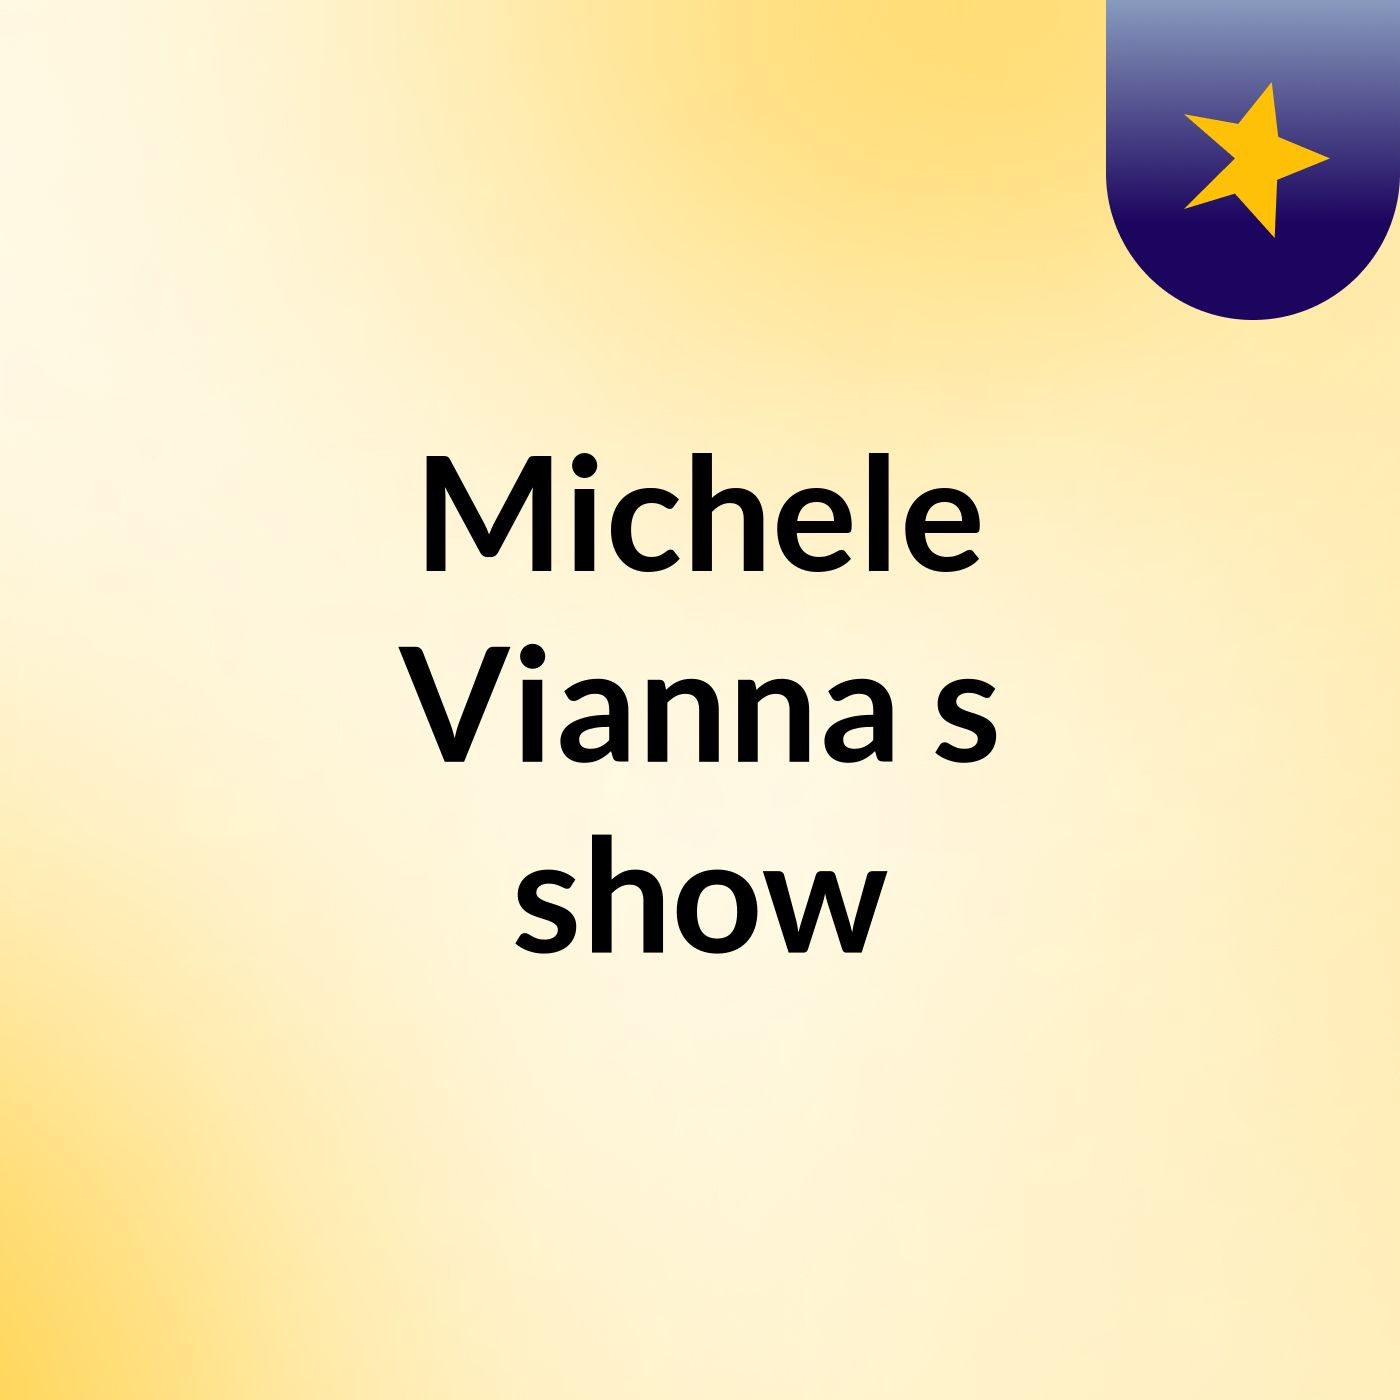 Michele Vianna's show